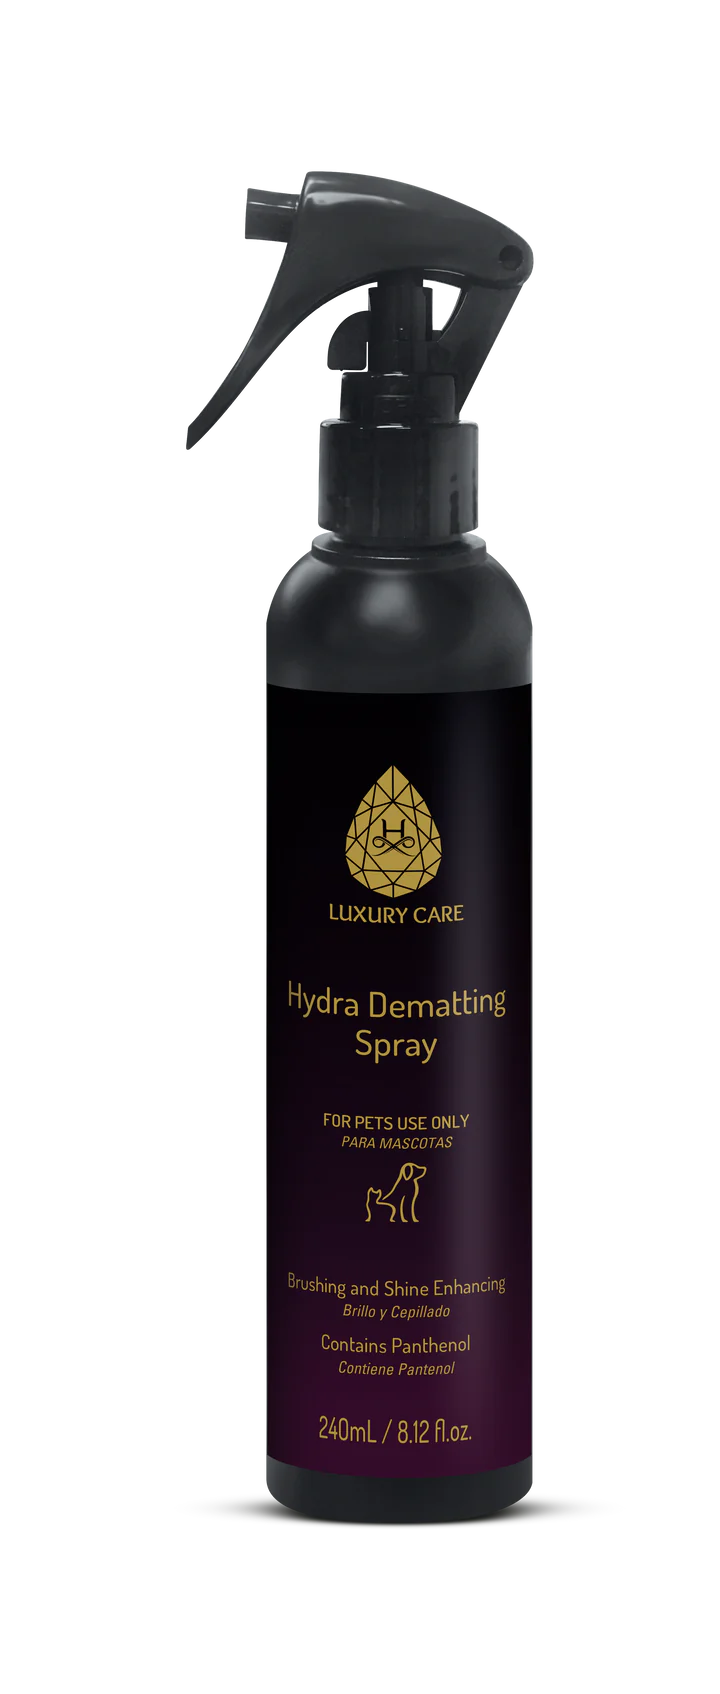 Hydra luxury care dematting spray 240ml